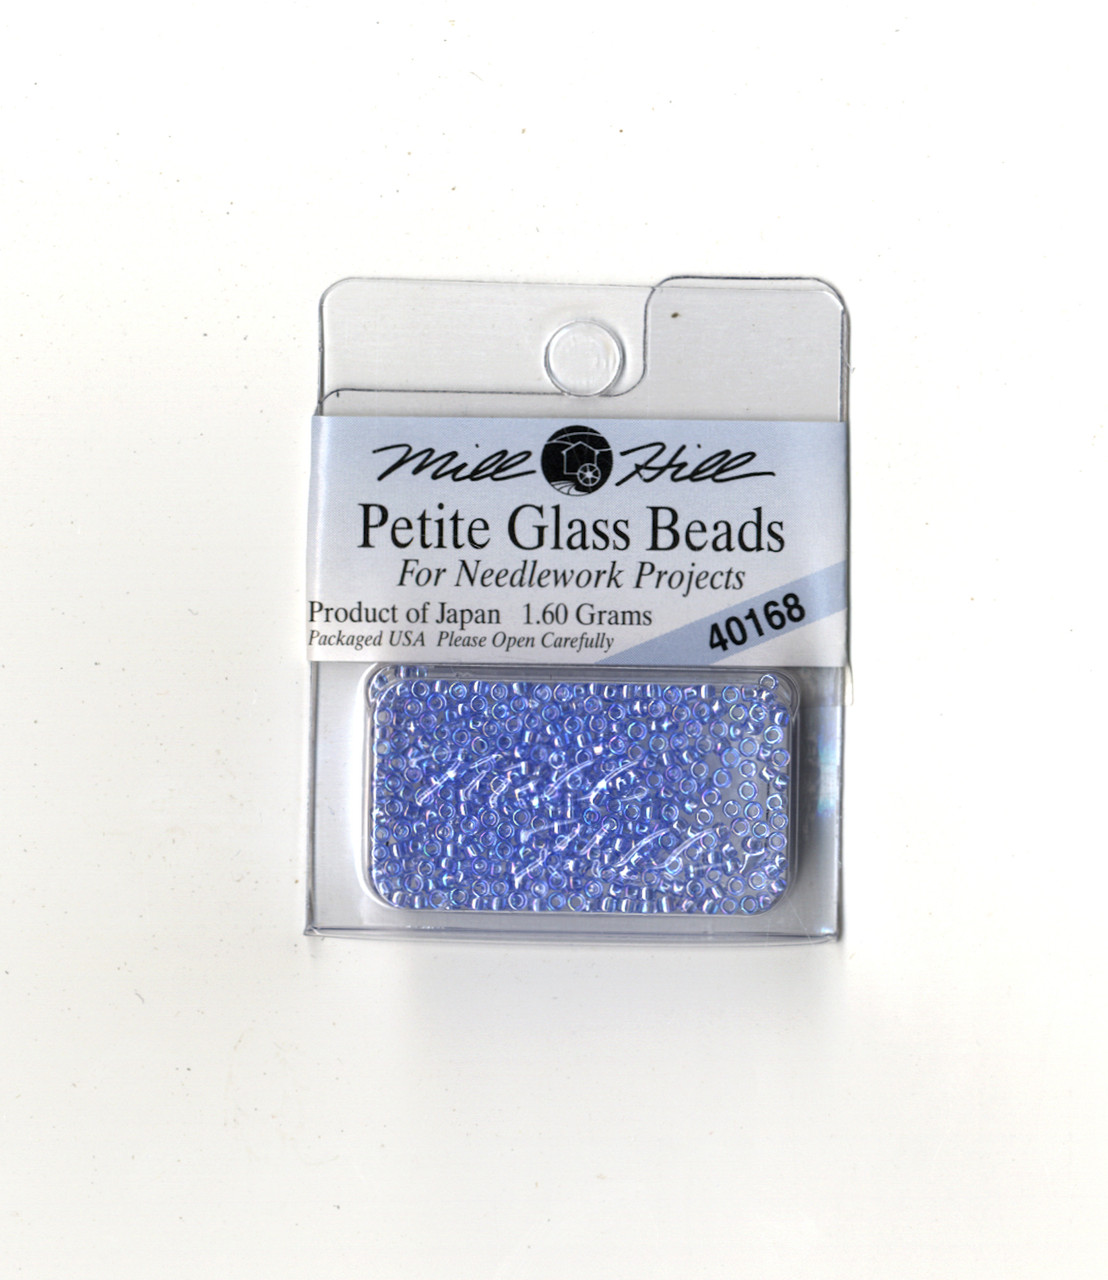 Mill Hill Petite Glass Beads 1.60g Sapphire #40168